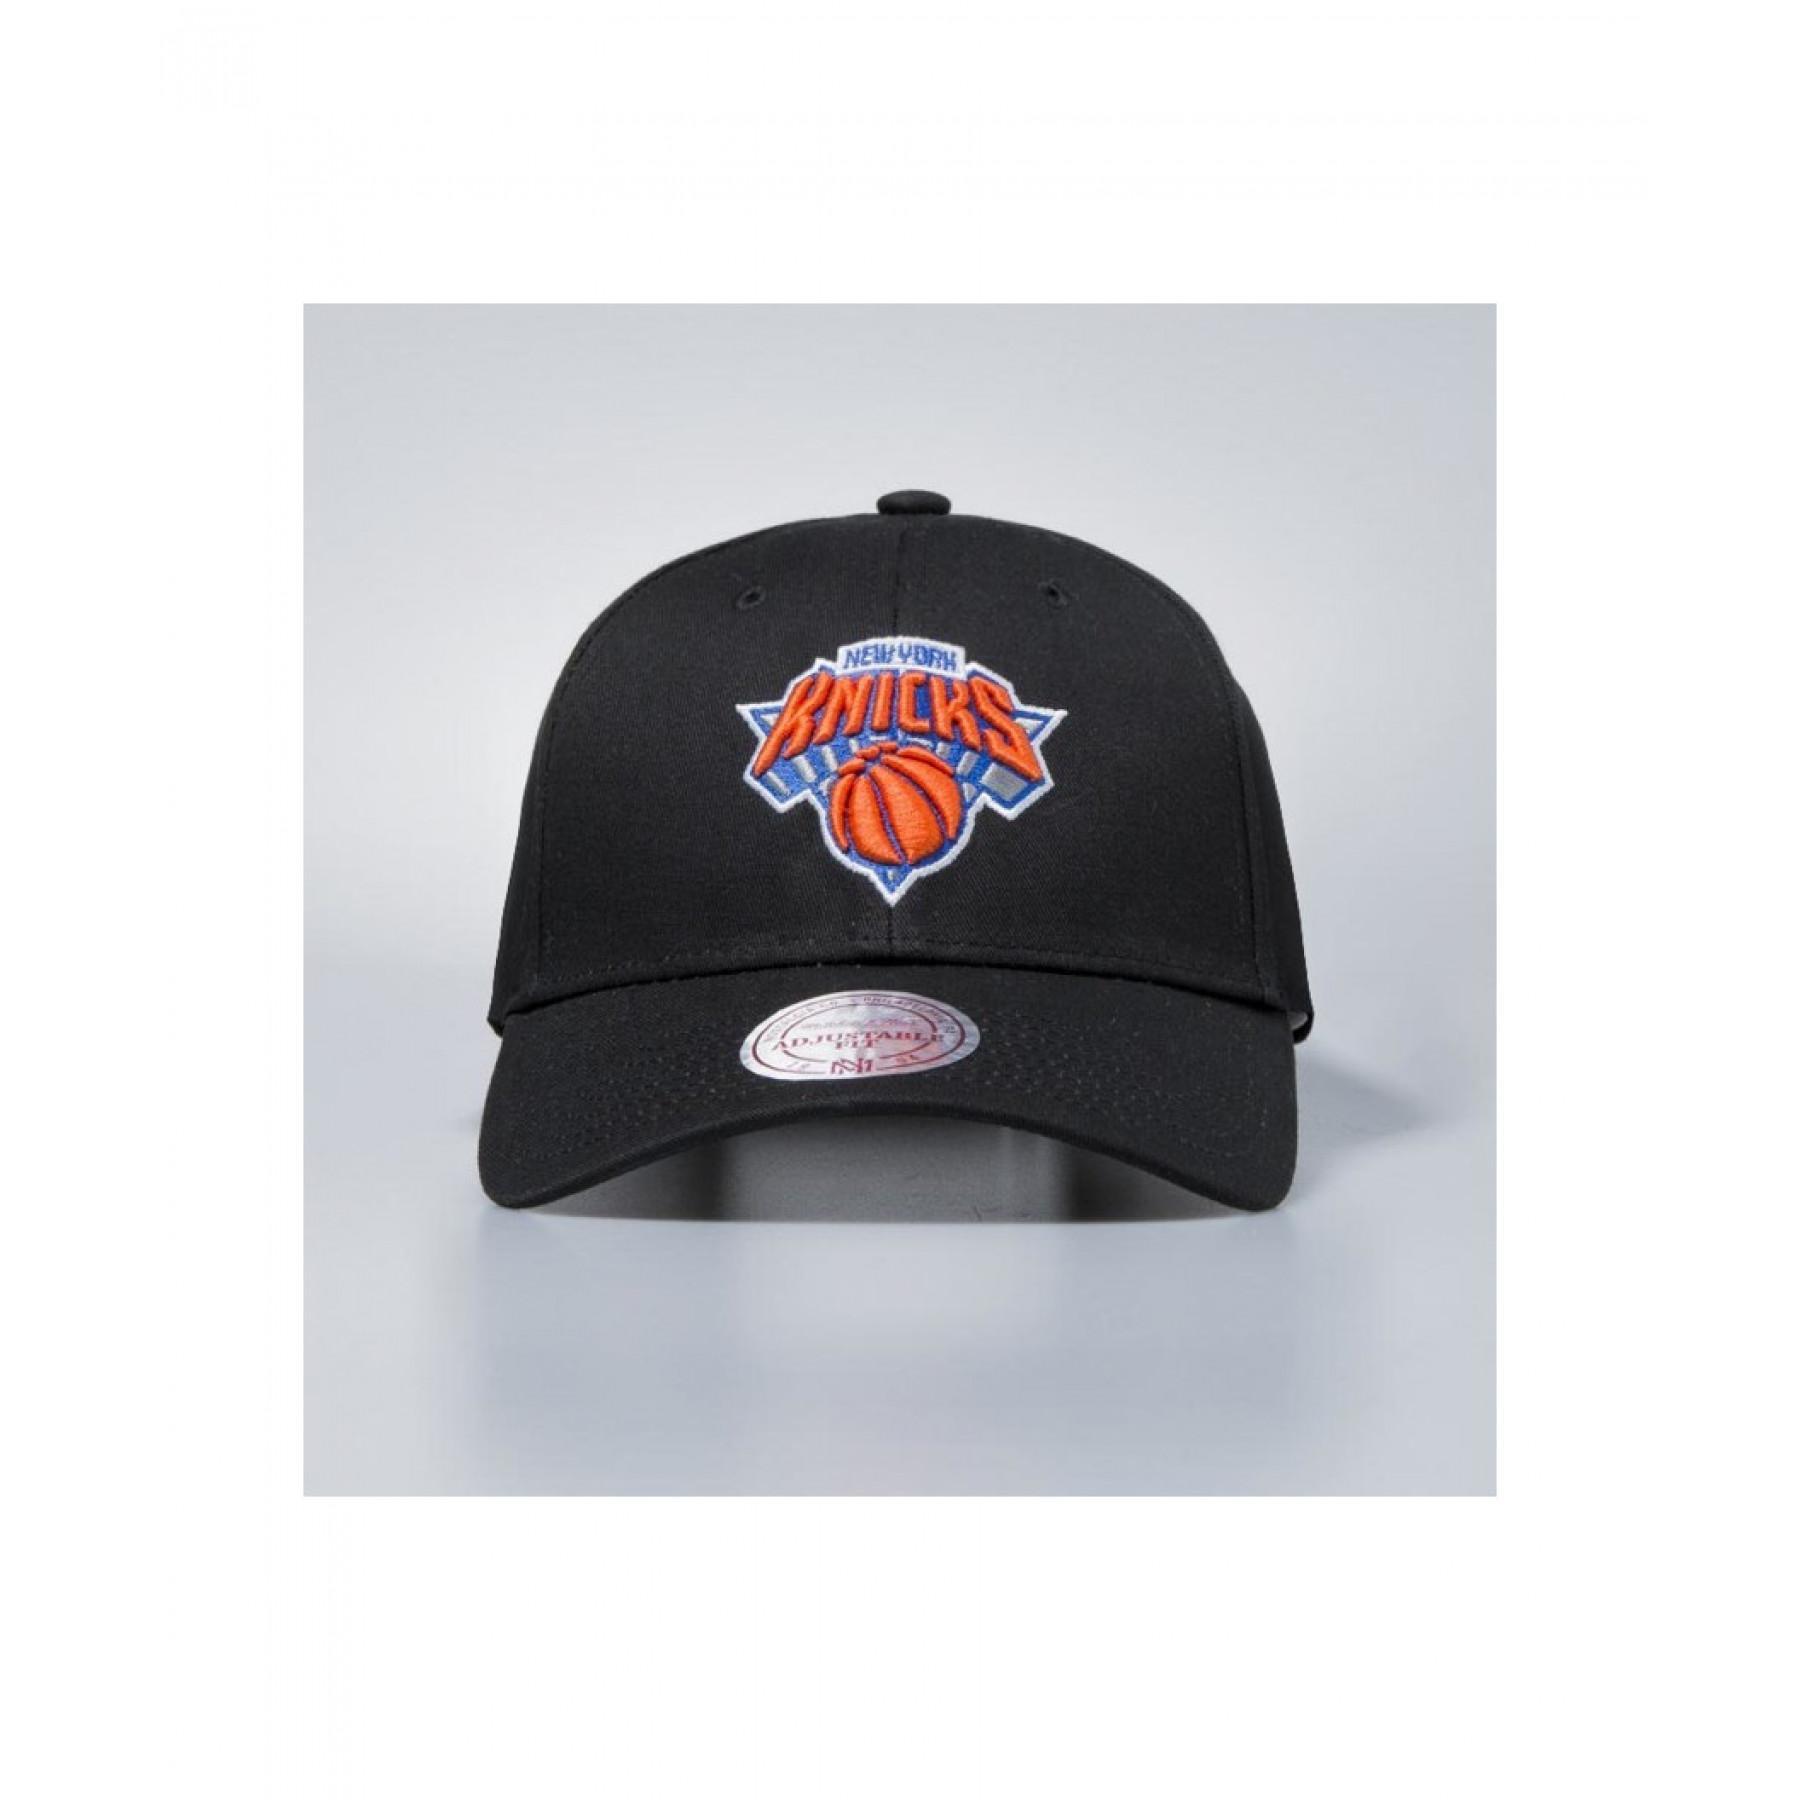 Cap New York Knicks team logo